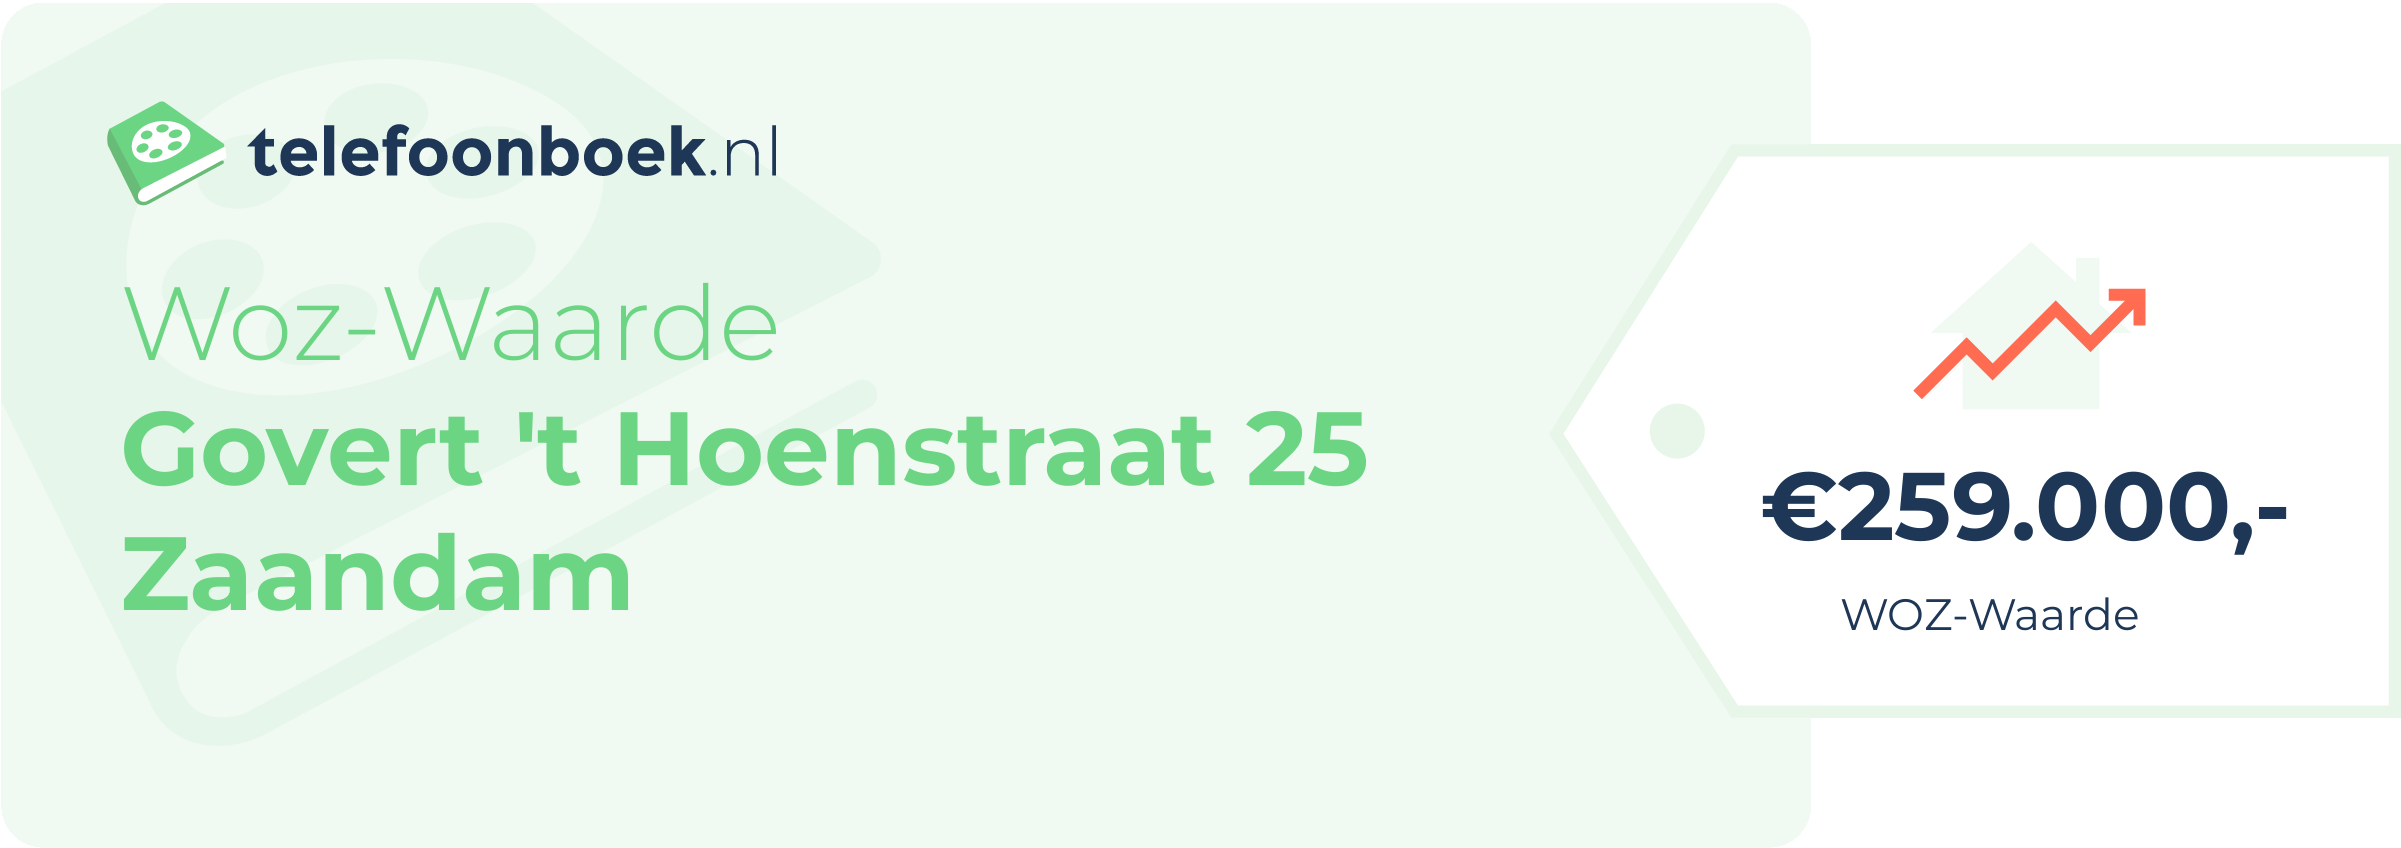 WOZ-waarde Govert 't Hoenstraat 25 Zaandam